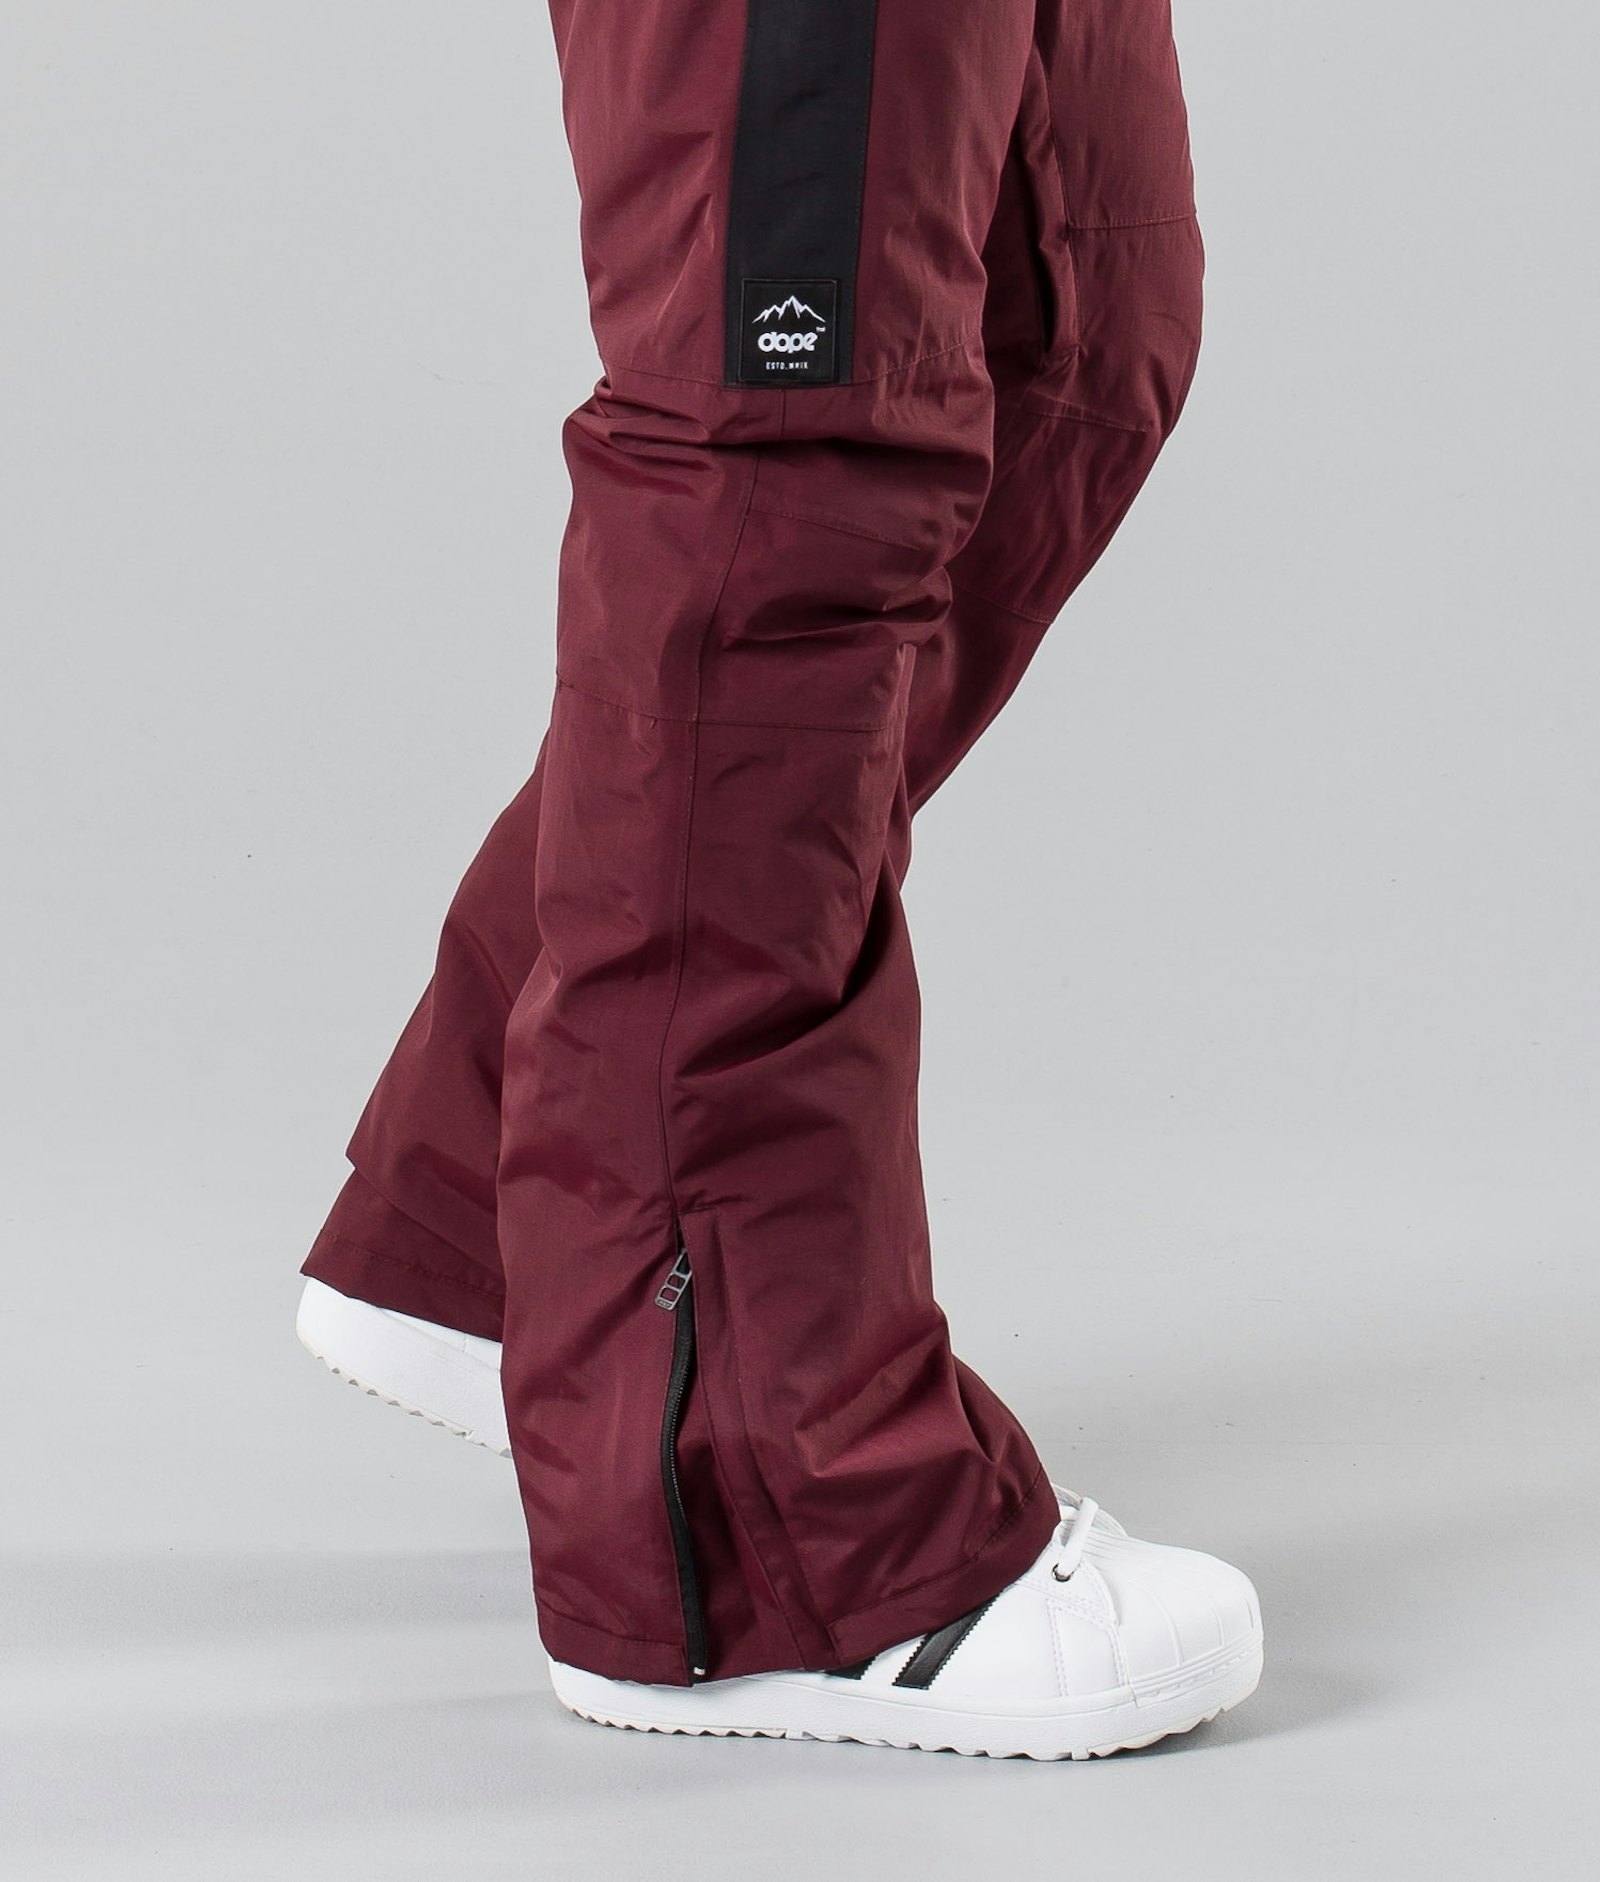 Dope Hoax II 2018 Kalhoty na Snowboard Pánské Burgundy